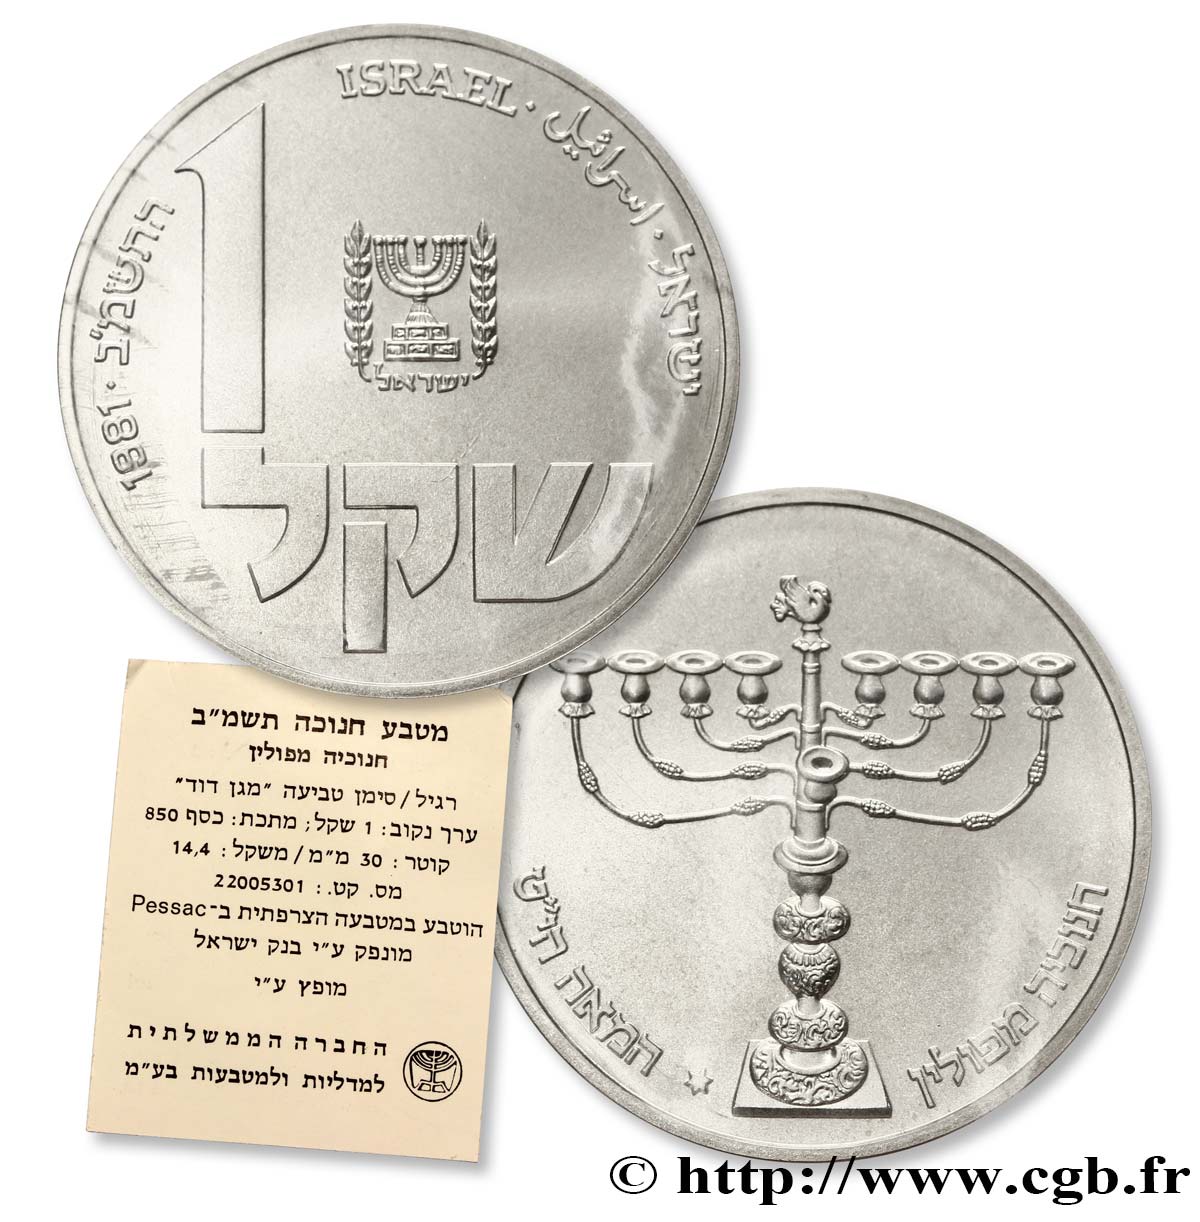 ISRAËL 1 Sheqel Hanukka - Lampe de Pologne an 5742 1981 Monnaie de Paris FDC 